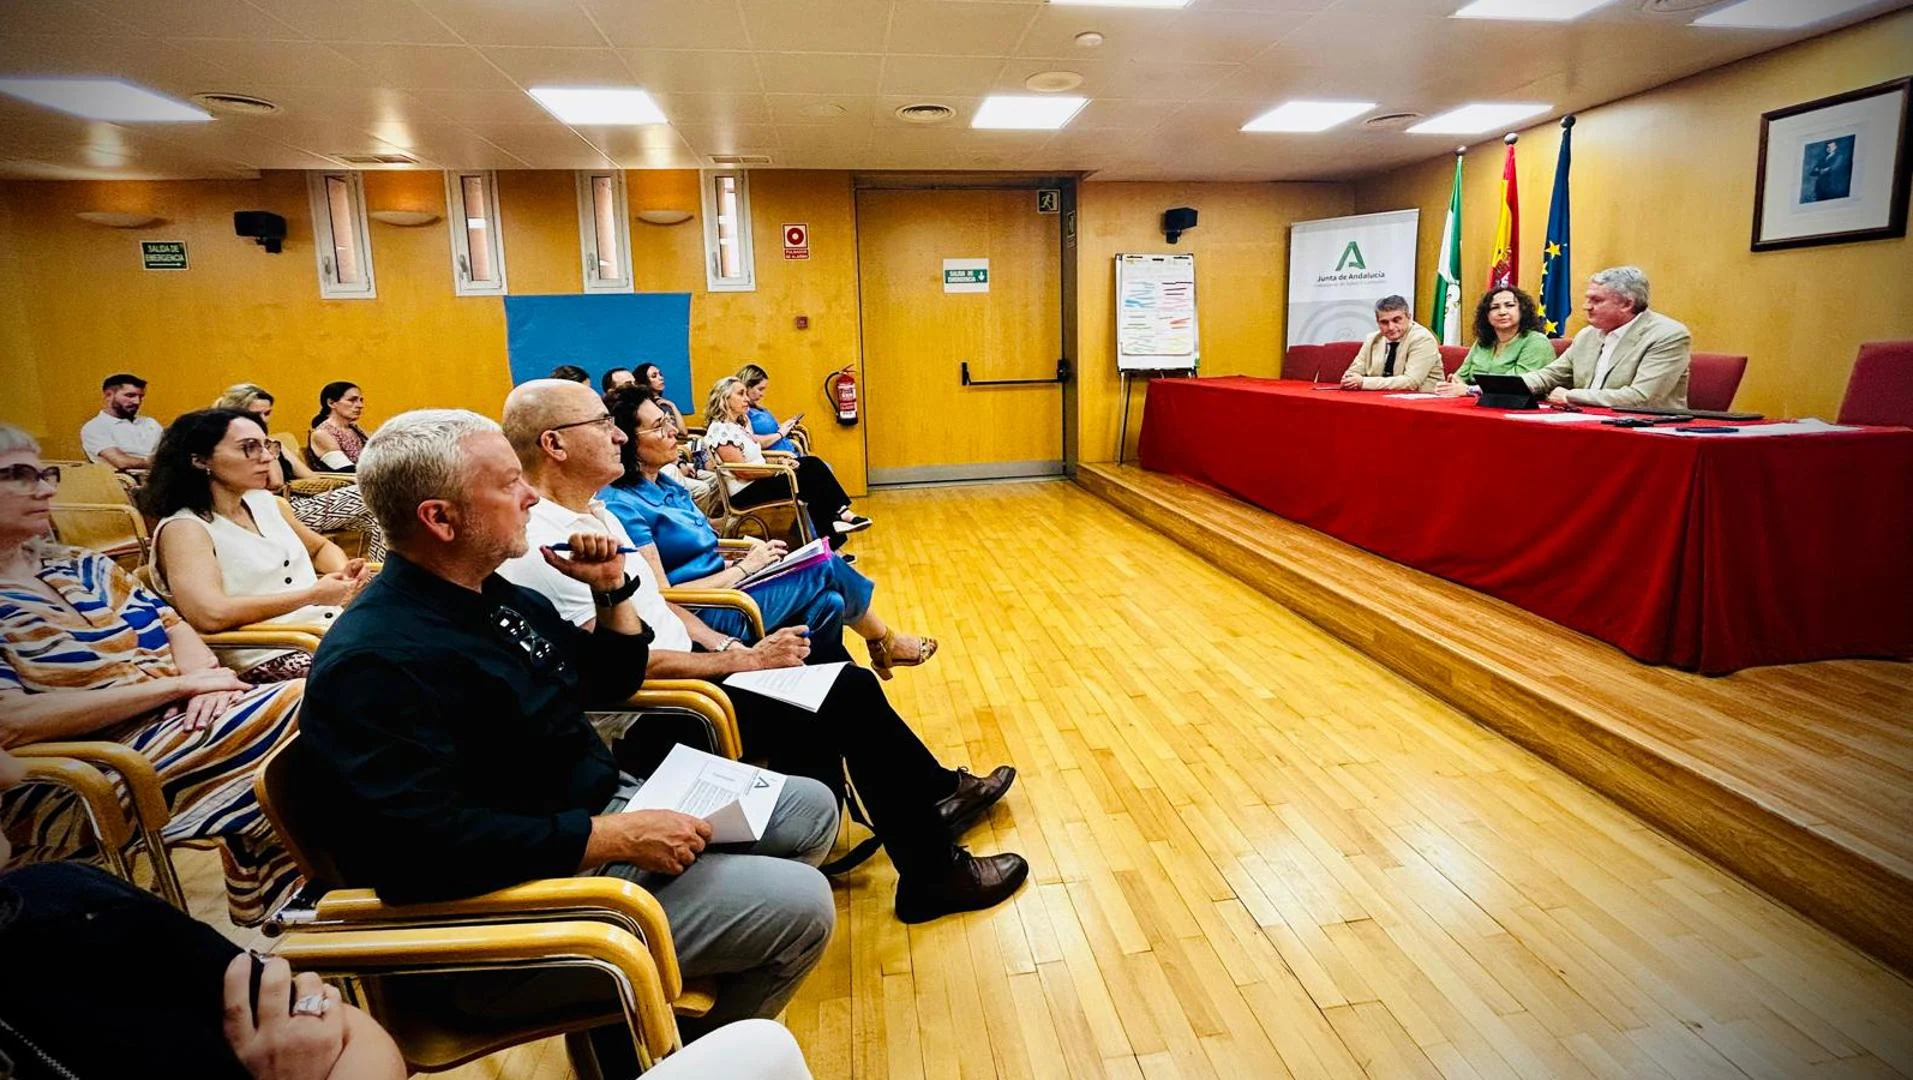 The Ministry of Health allocates 700,000 euros to open three dental health clinics in Almería